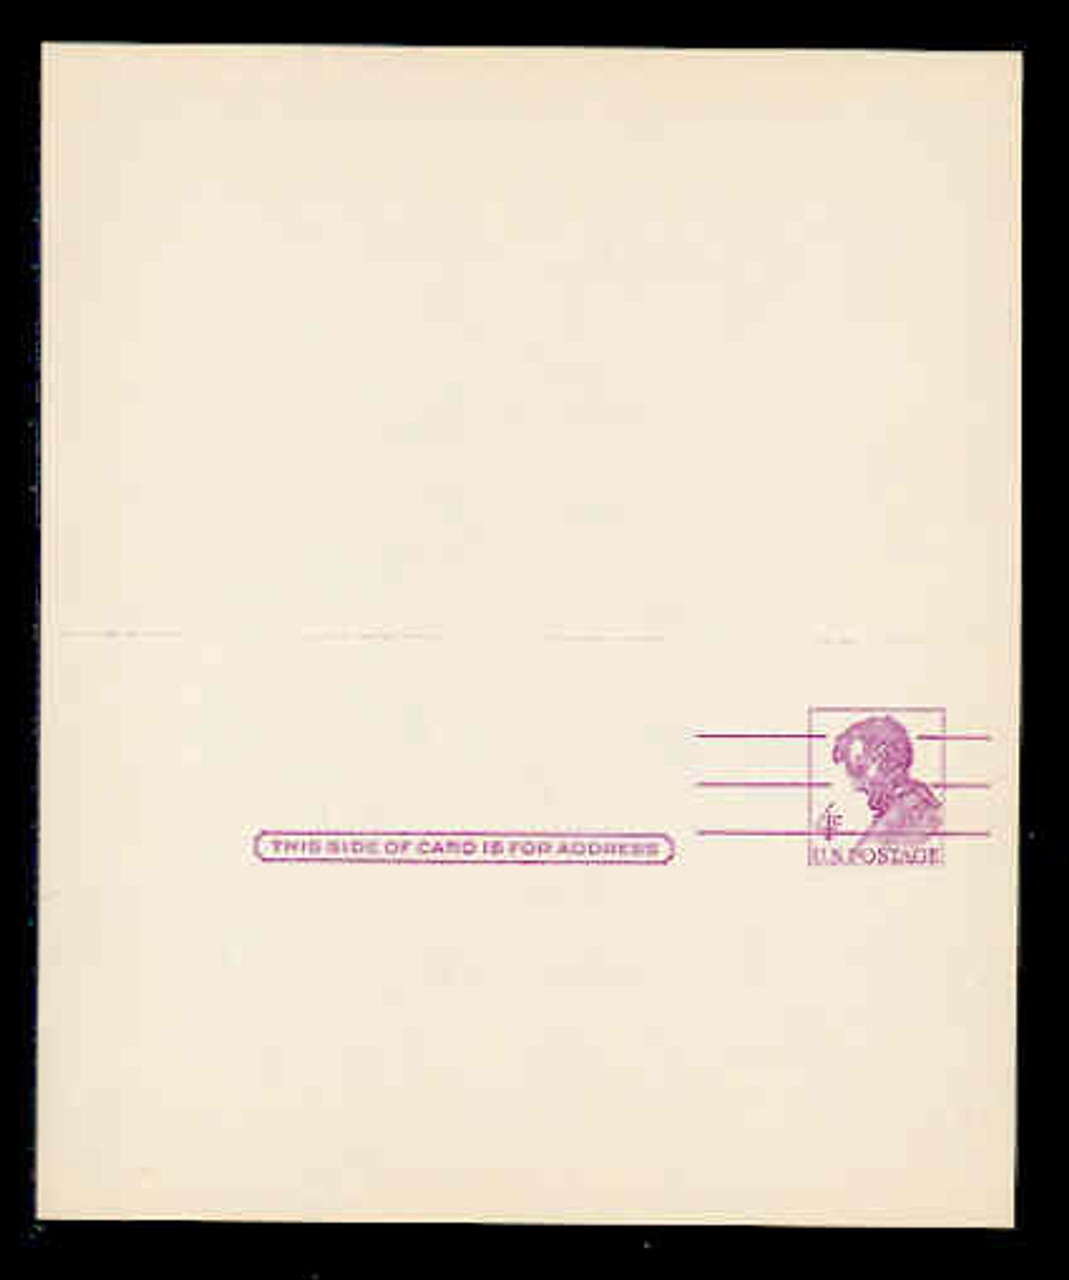 USA Scott # UY 18 FM, 1964 4c Abraham Lincoln, Precancelled - Mint Message-Reply Card, FLUORESCENT PAPER - UNFOLDED